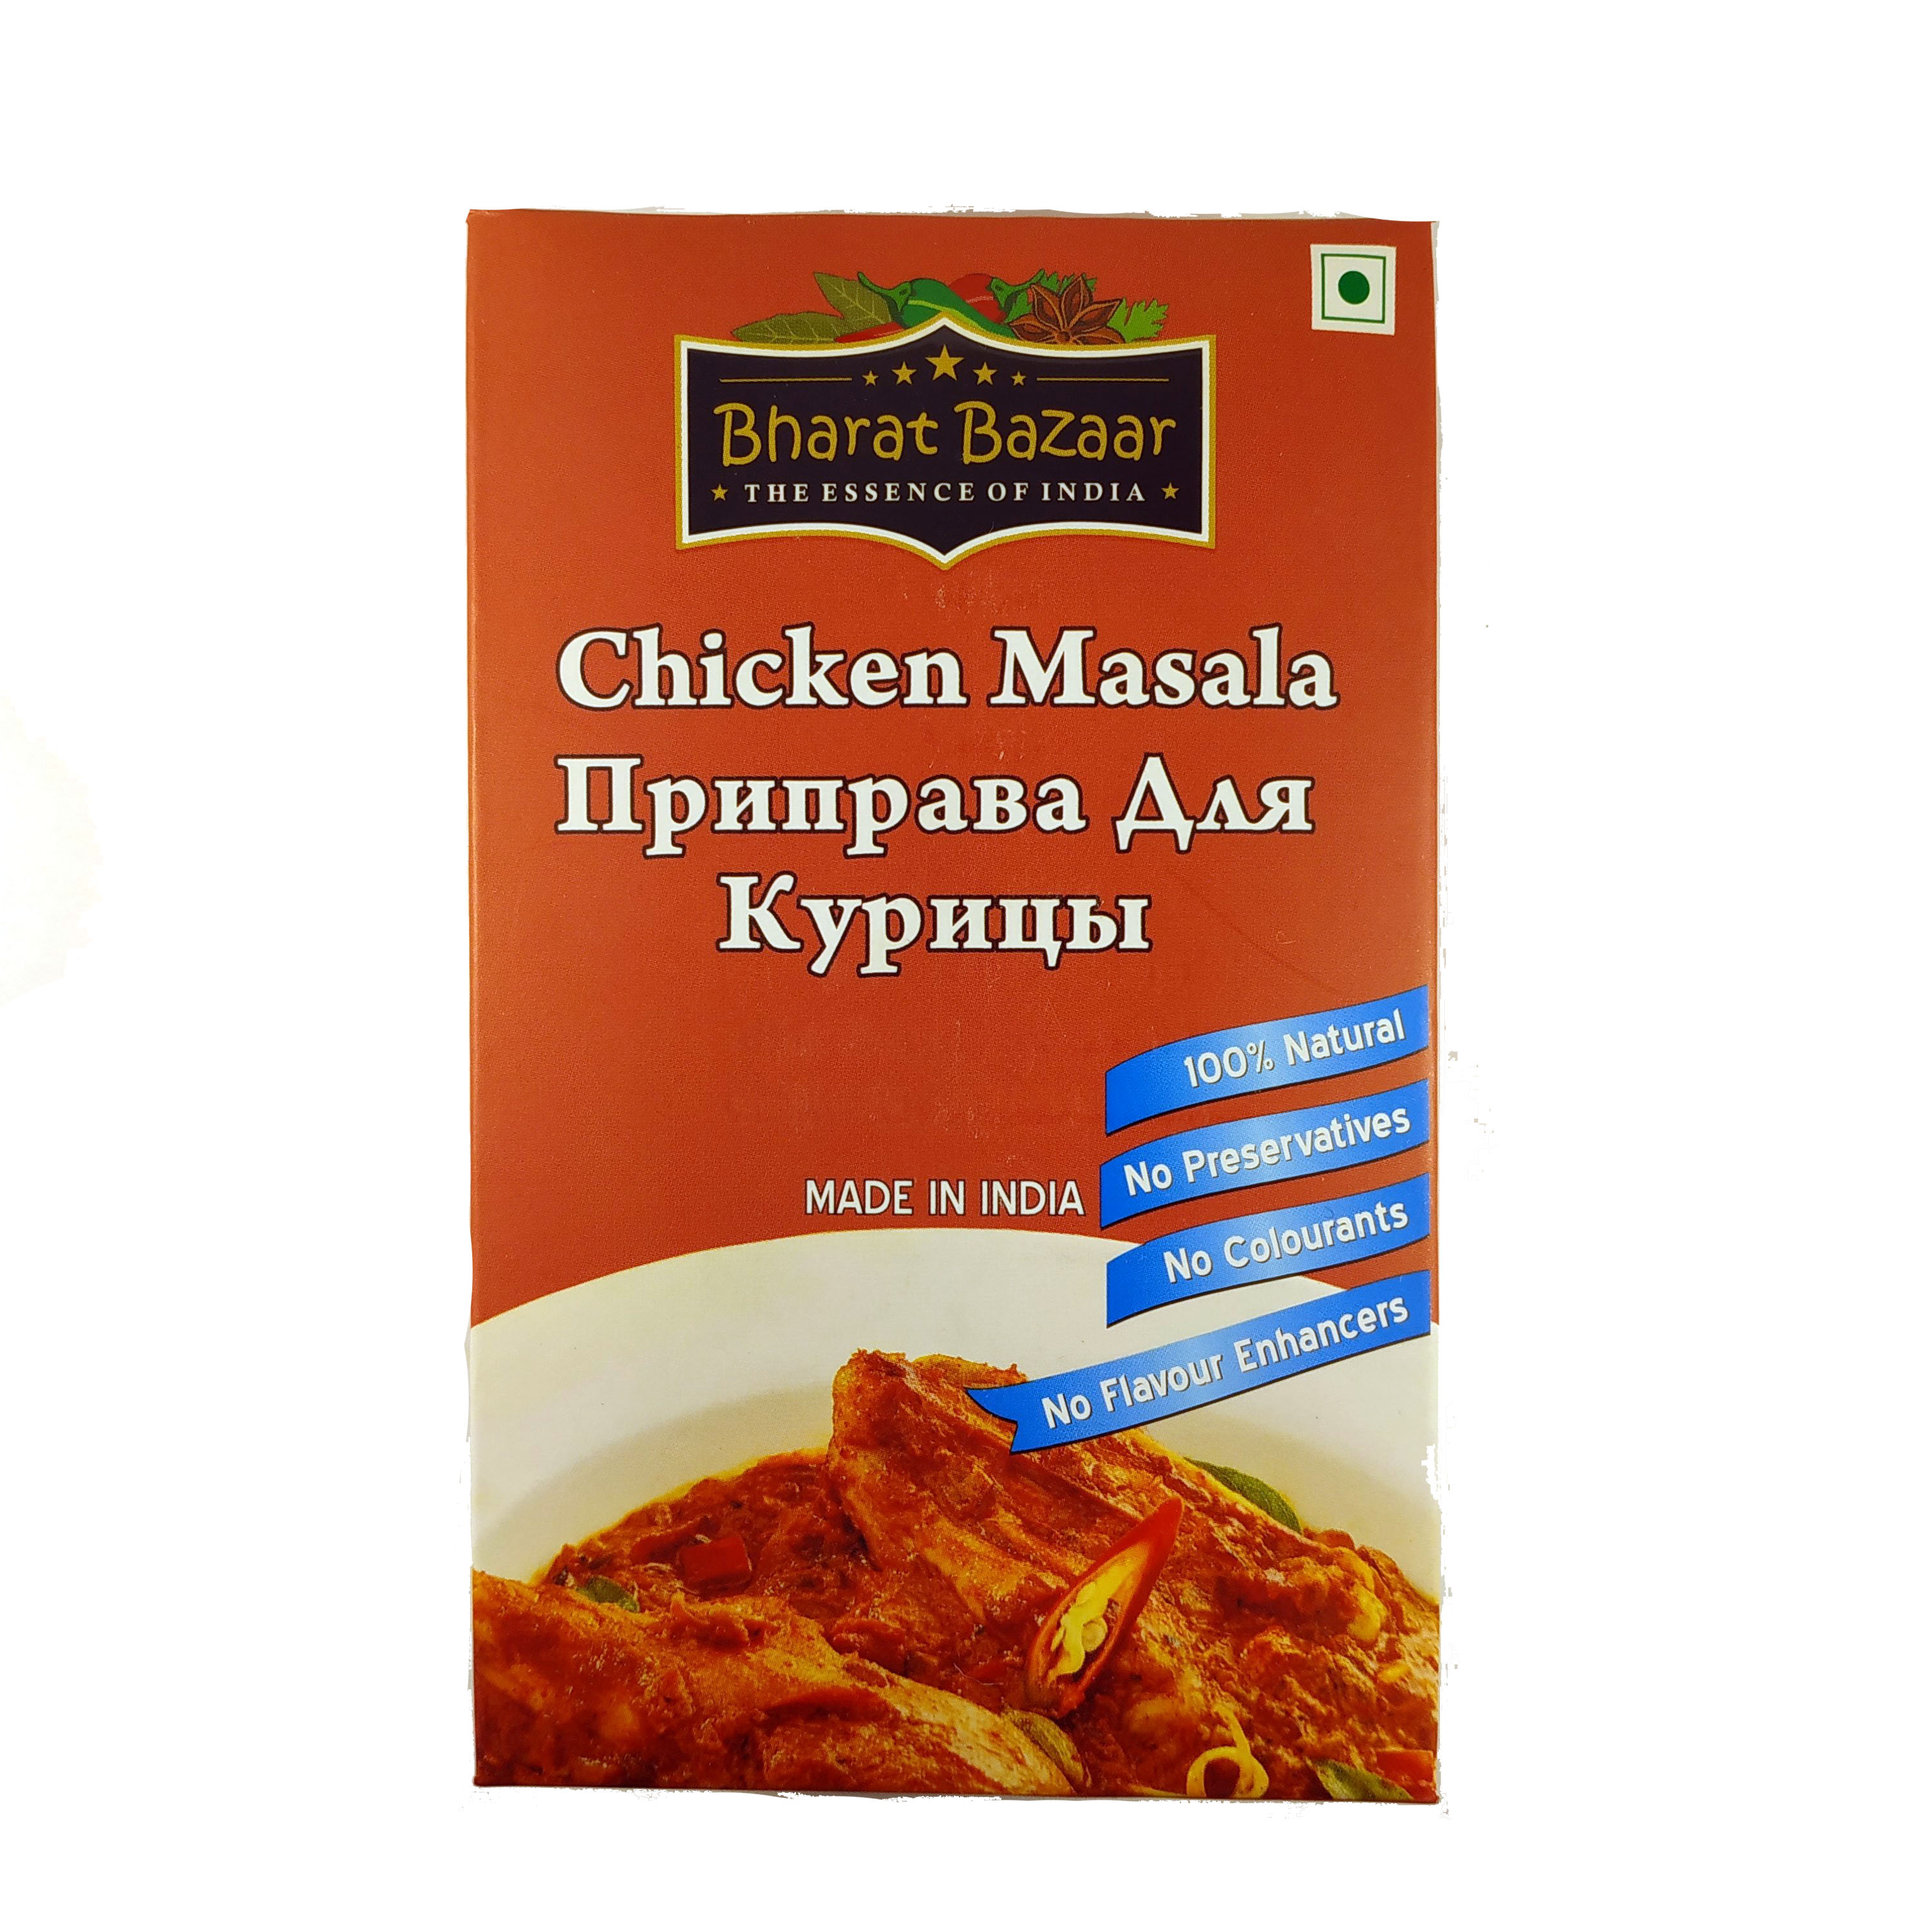 CHICKEN MASALA Bharat Bazaar (Приправа Для Курицы, коробка, Бхарат Базар), 100 г.